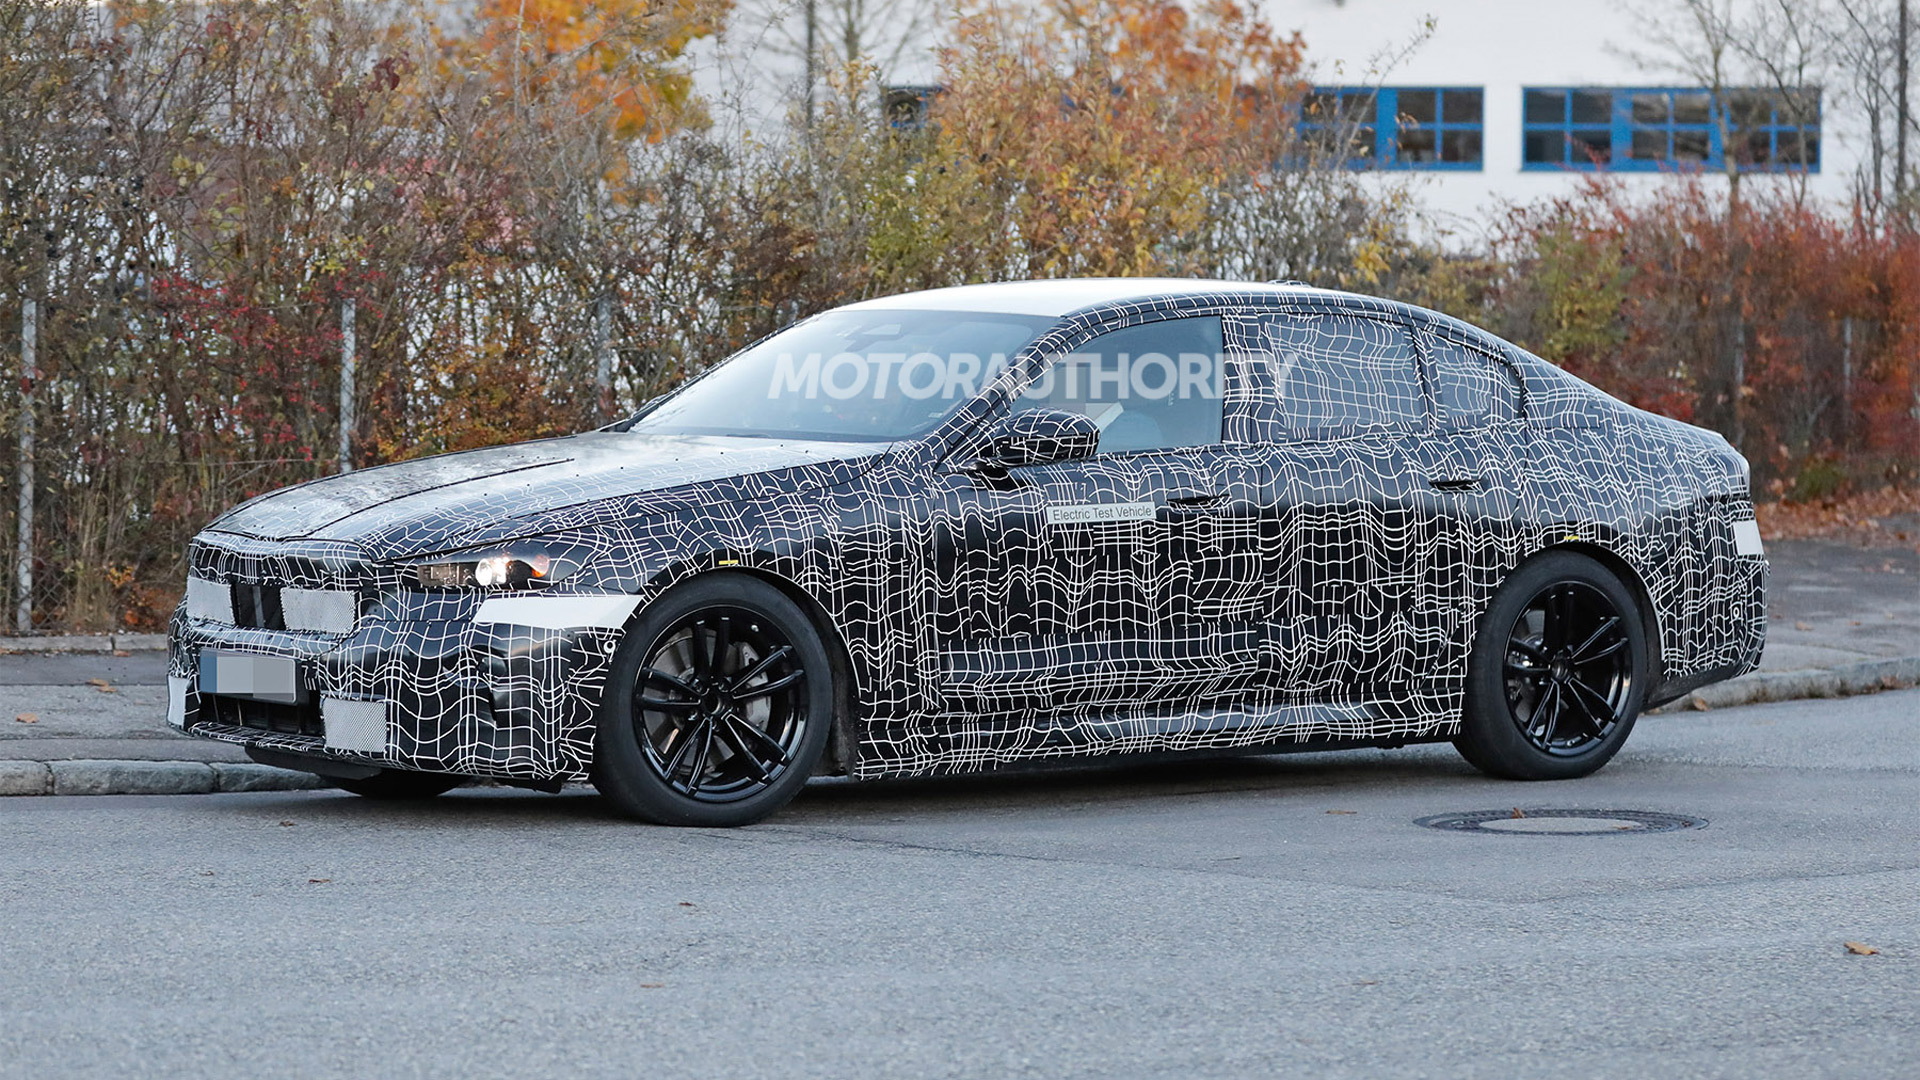 2024 BMW i5 (electric 5-Series) spy shots - Photo credit: S. Baldauf/SB-Medien